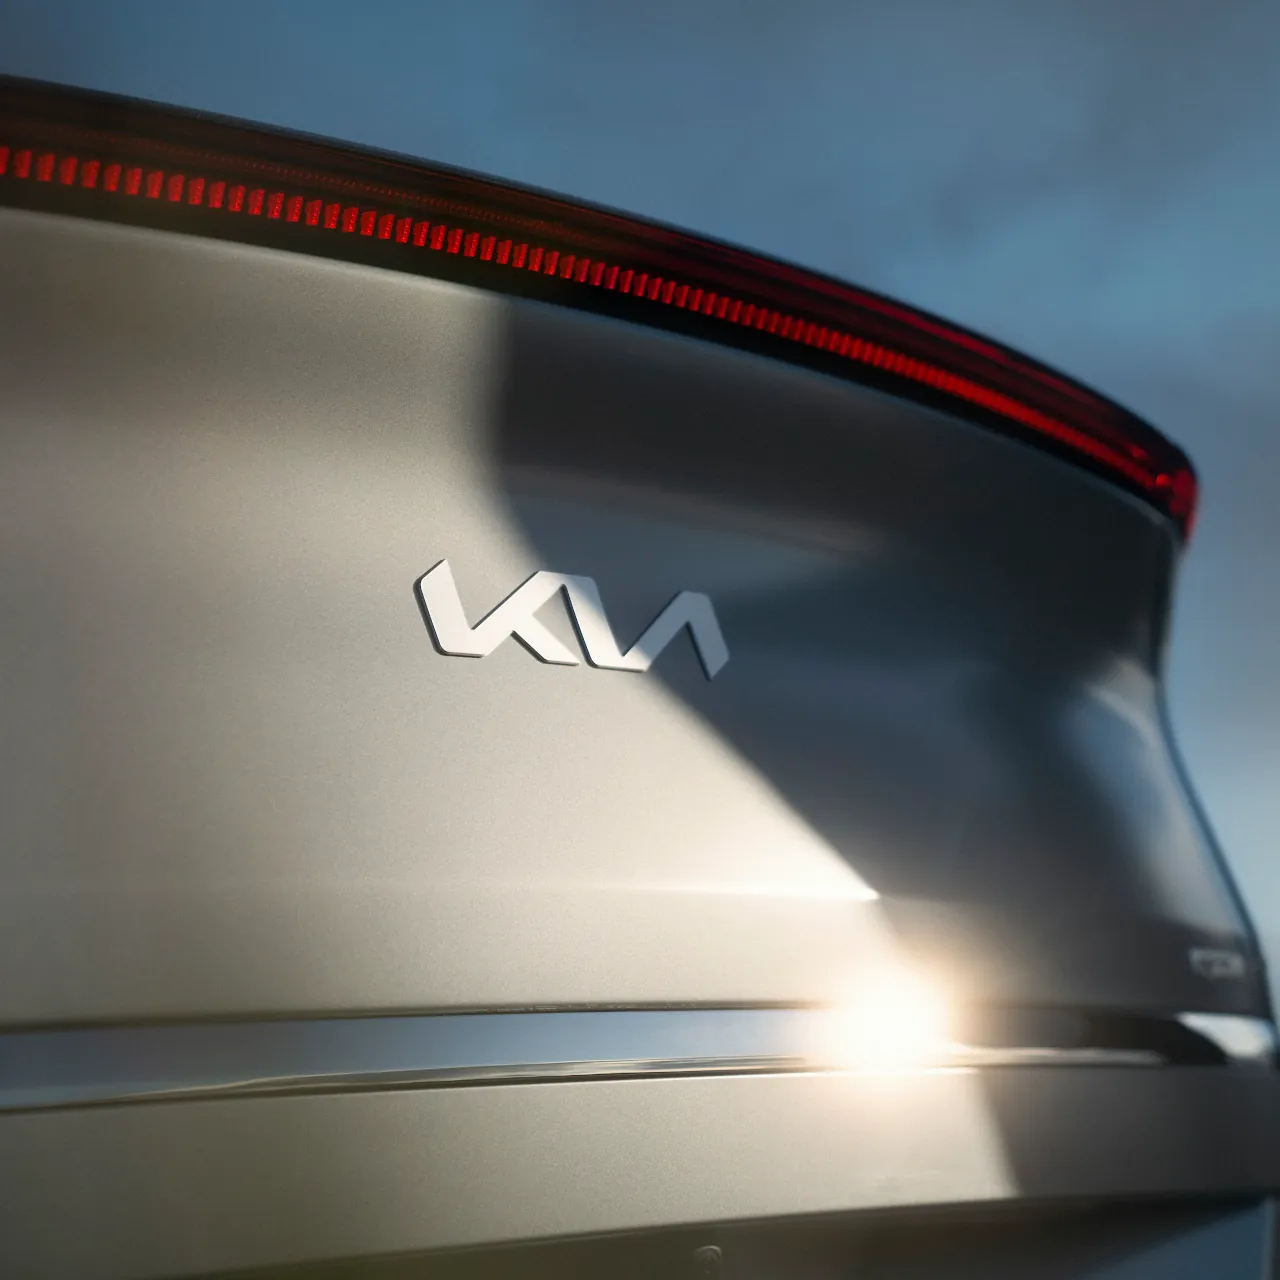 Kia 7 year warranty more information link